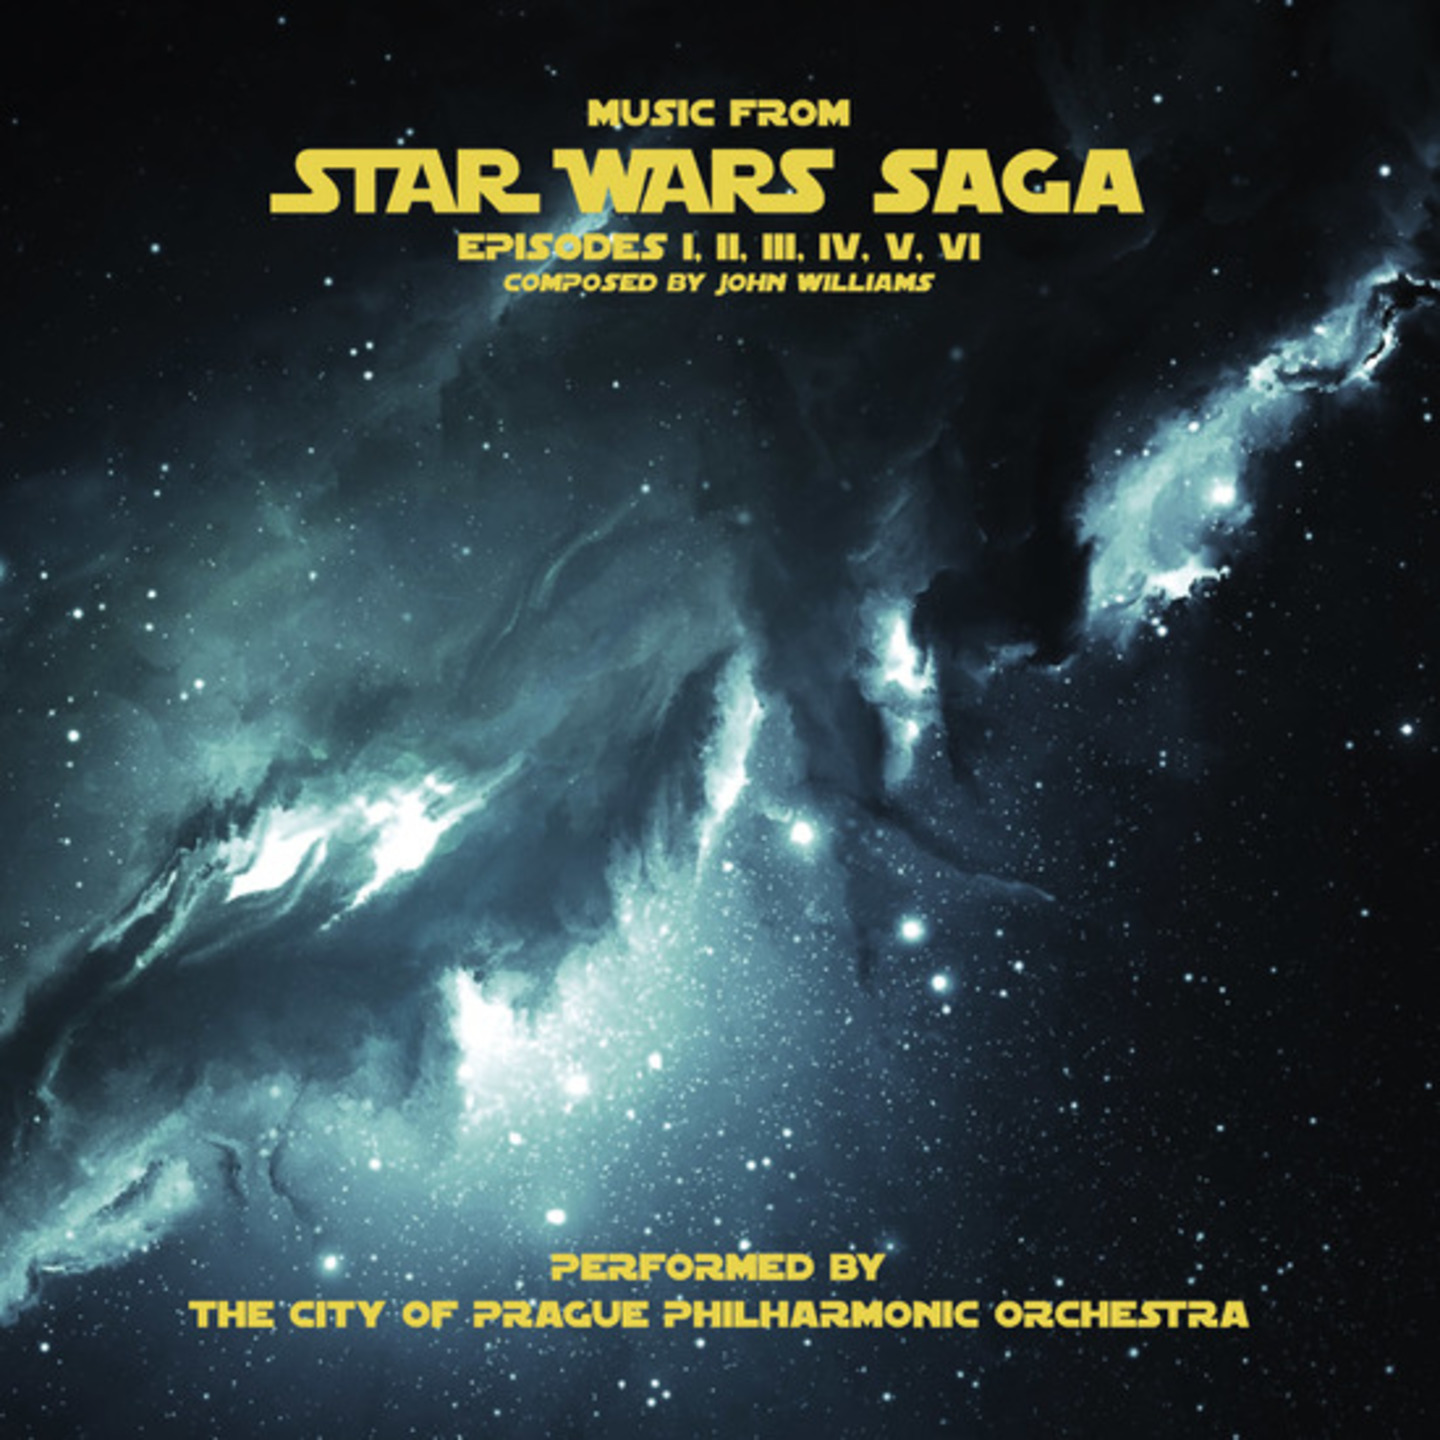 CITY OF PRAGUE PHILHARMONIC ORCHESTRA, THE - Music From Star Wars Saga Episodes I - VI 2xLP  Grey Vinyl